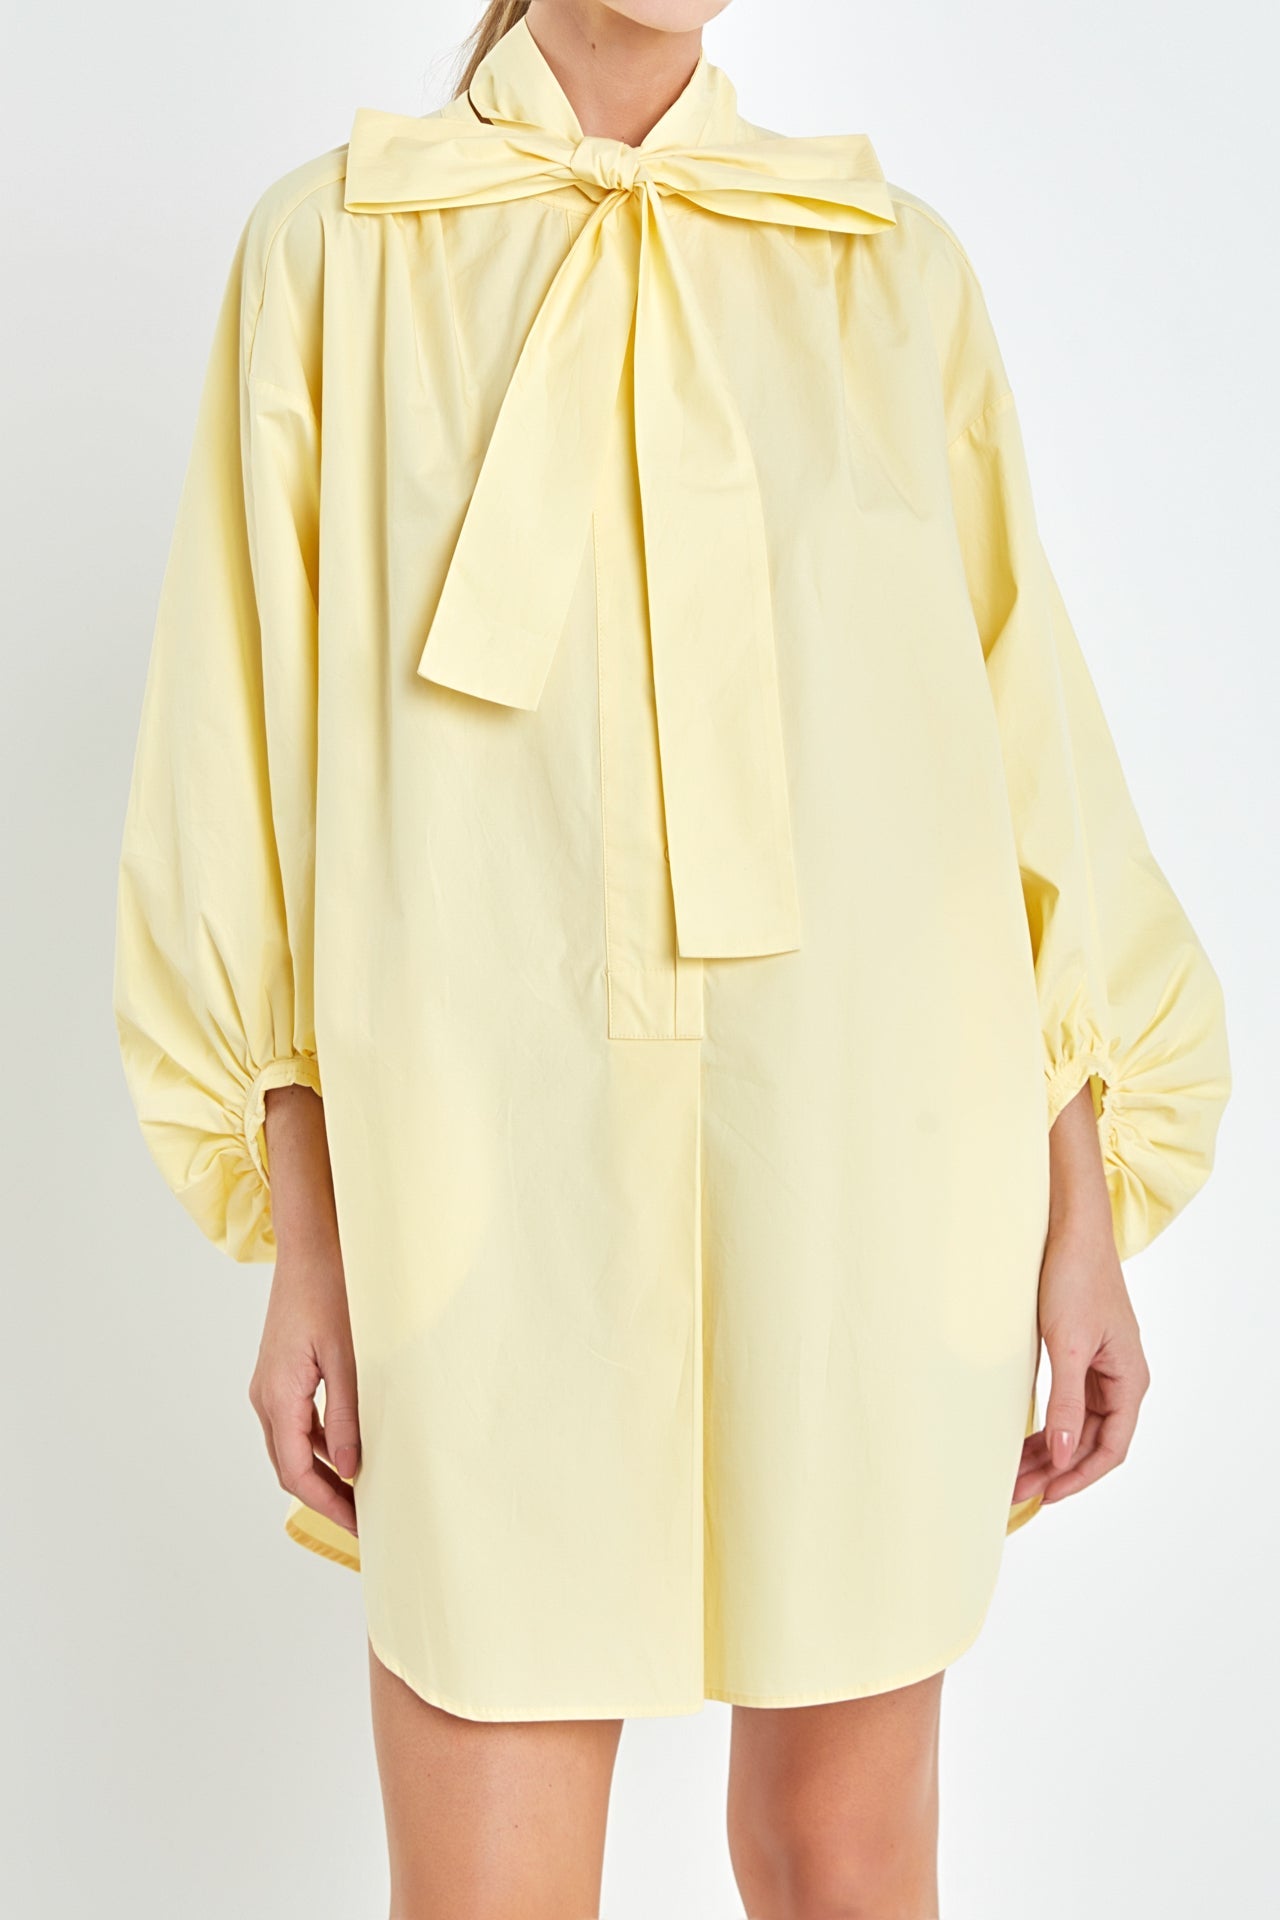 Ava Billow Mini Butter Dress, yellow button up dress by english factory 